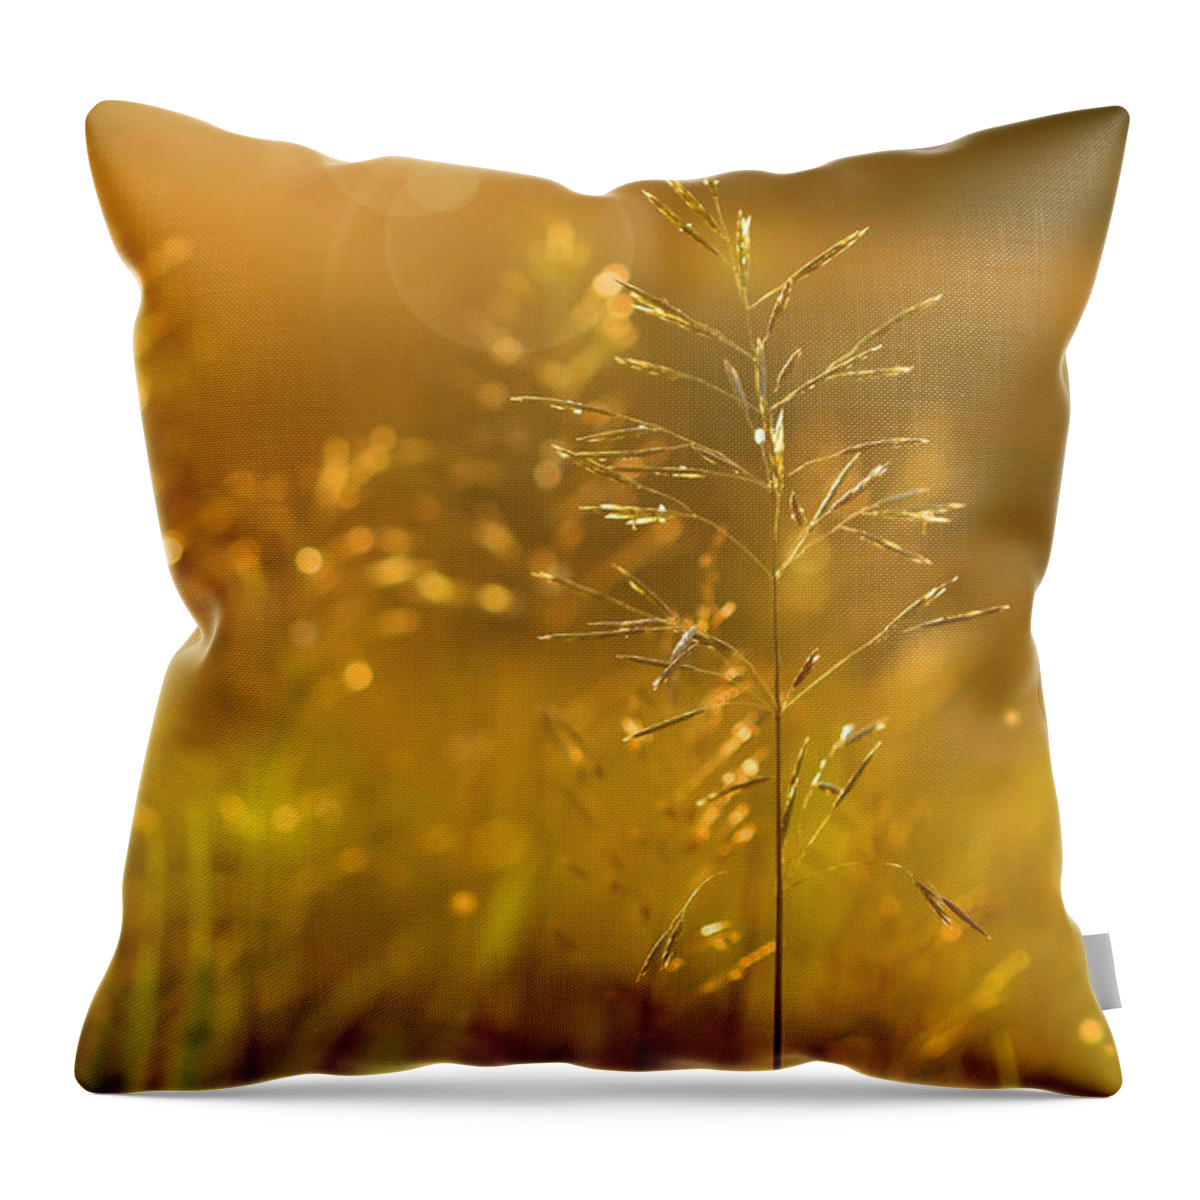 Afternoon Throw Pillow featuring the digital art Golden glow by Sandra Cunningham